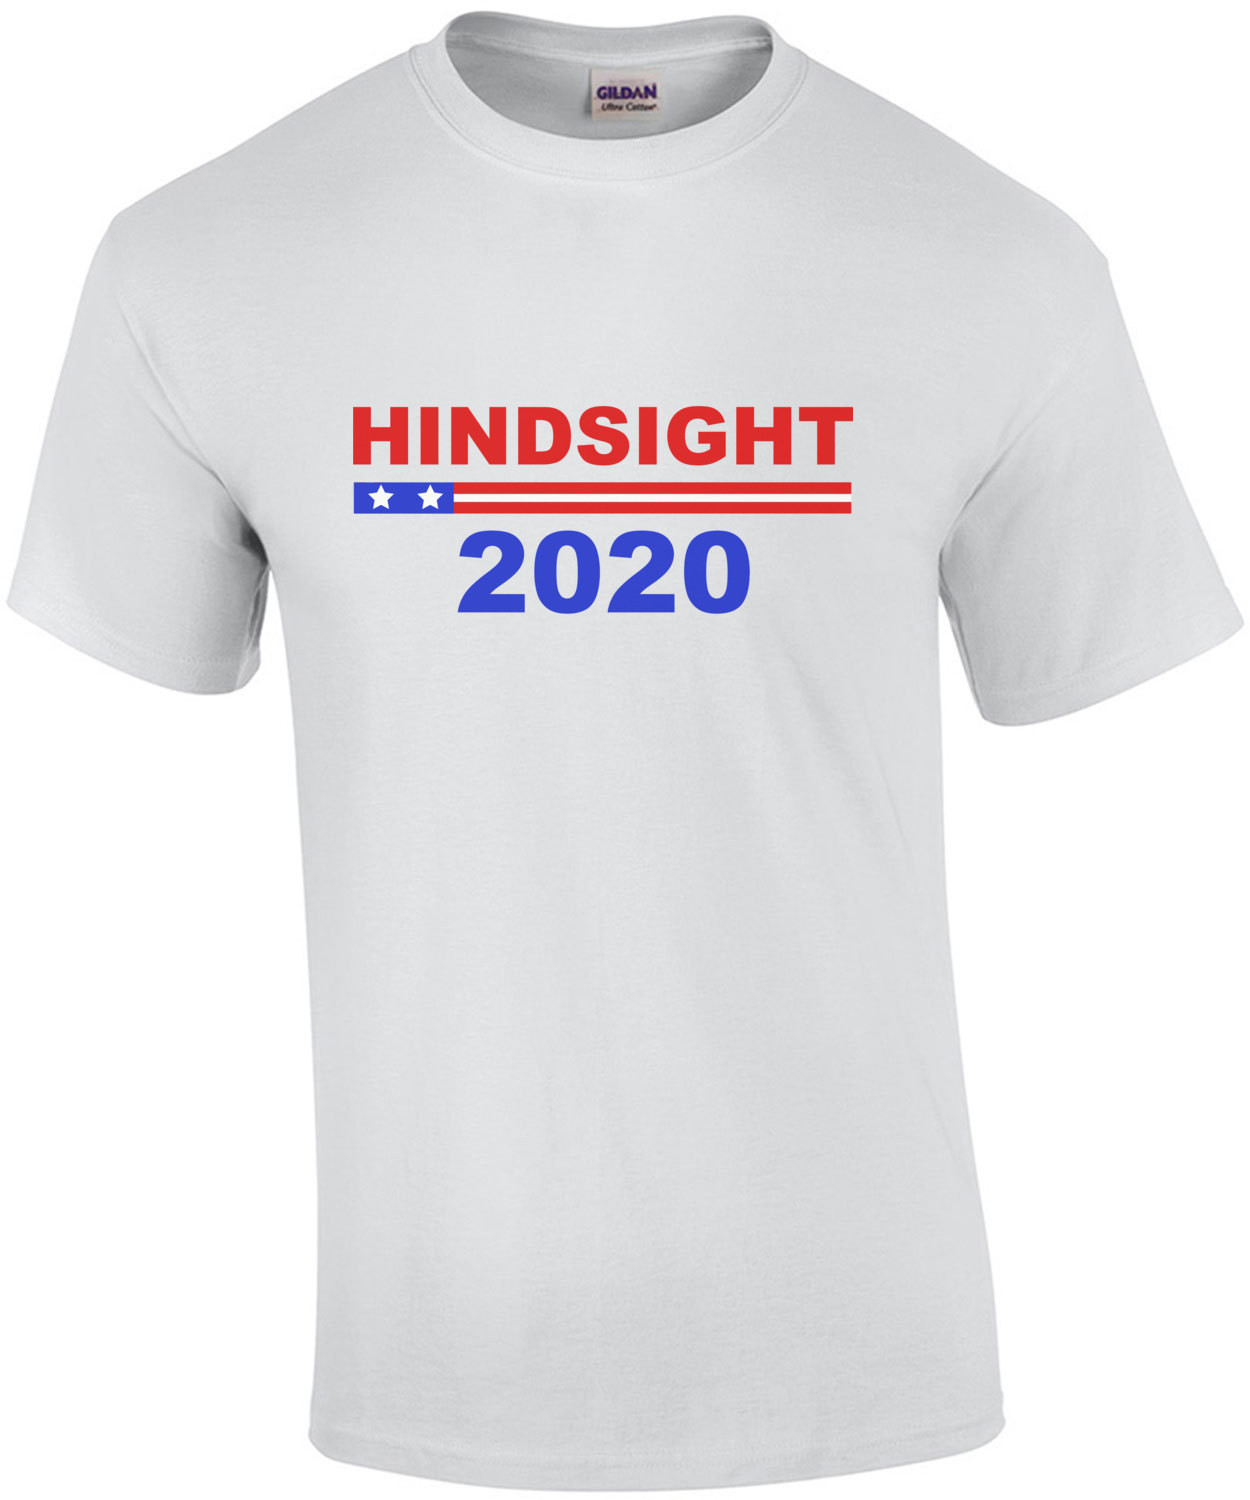 Hindsight 2020 - Funny Political T-Shirt